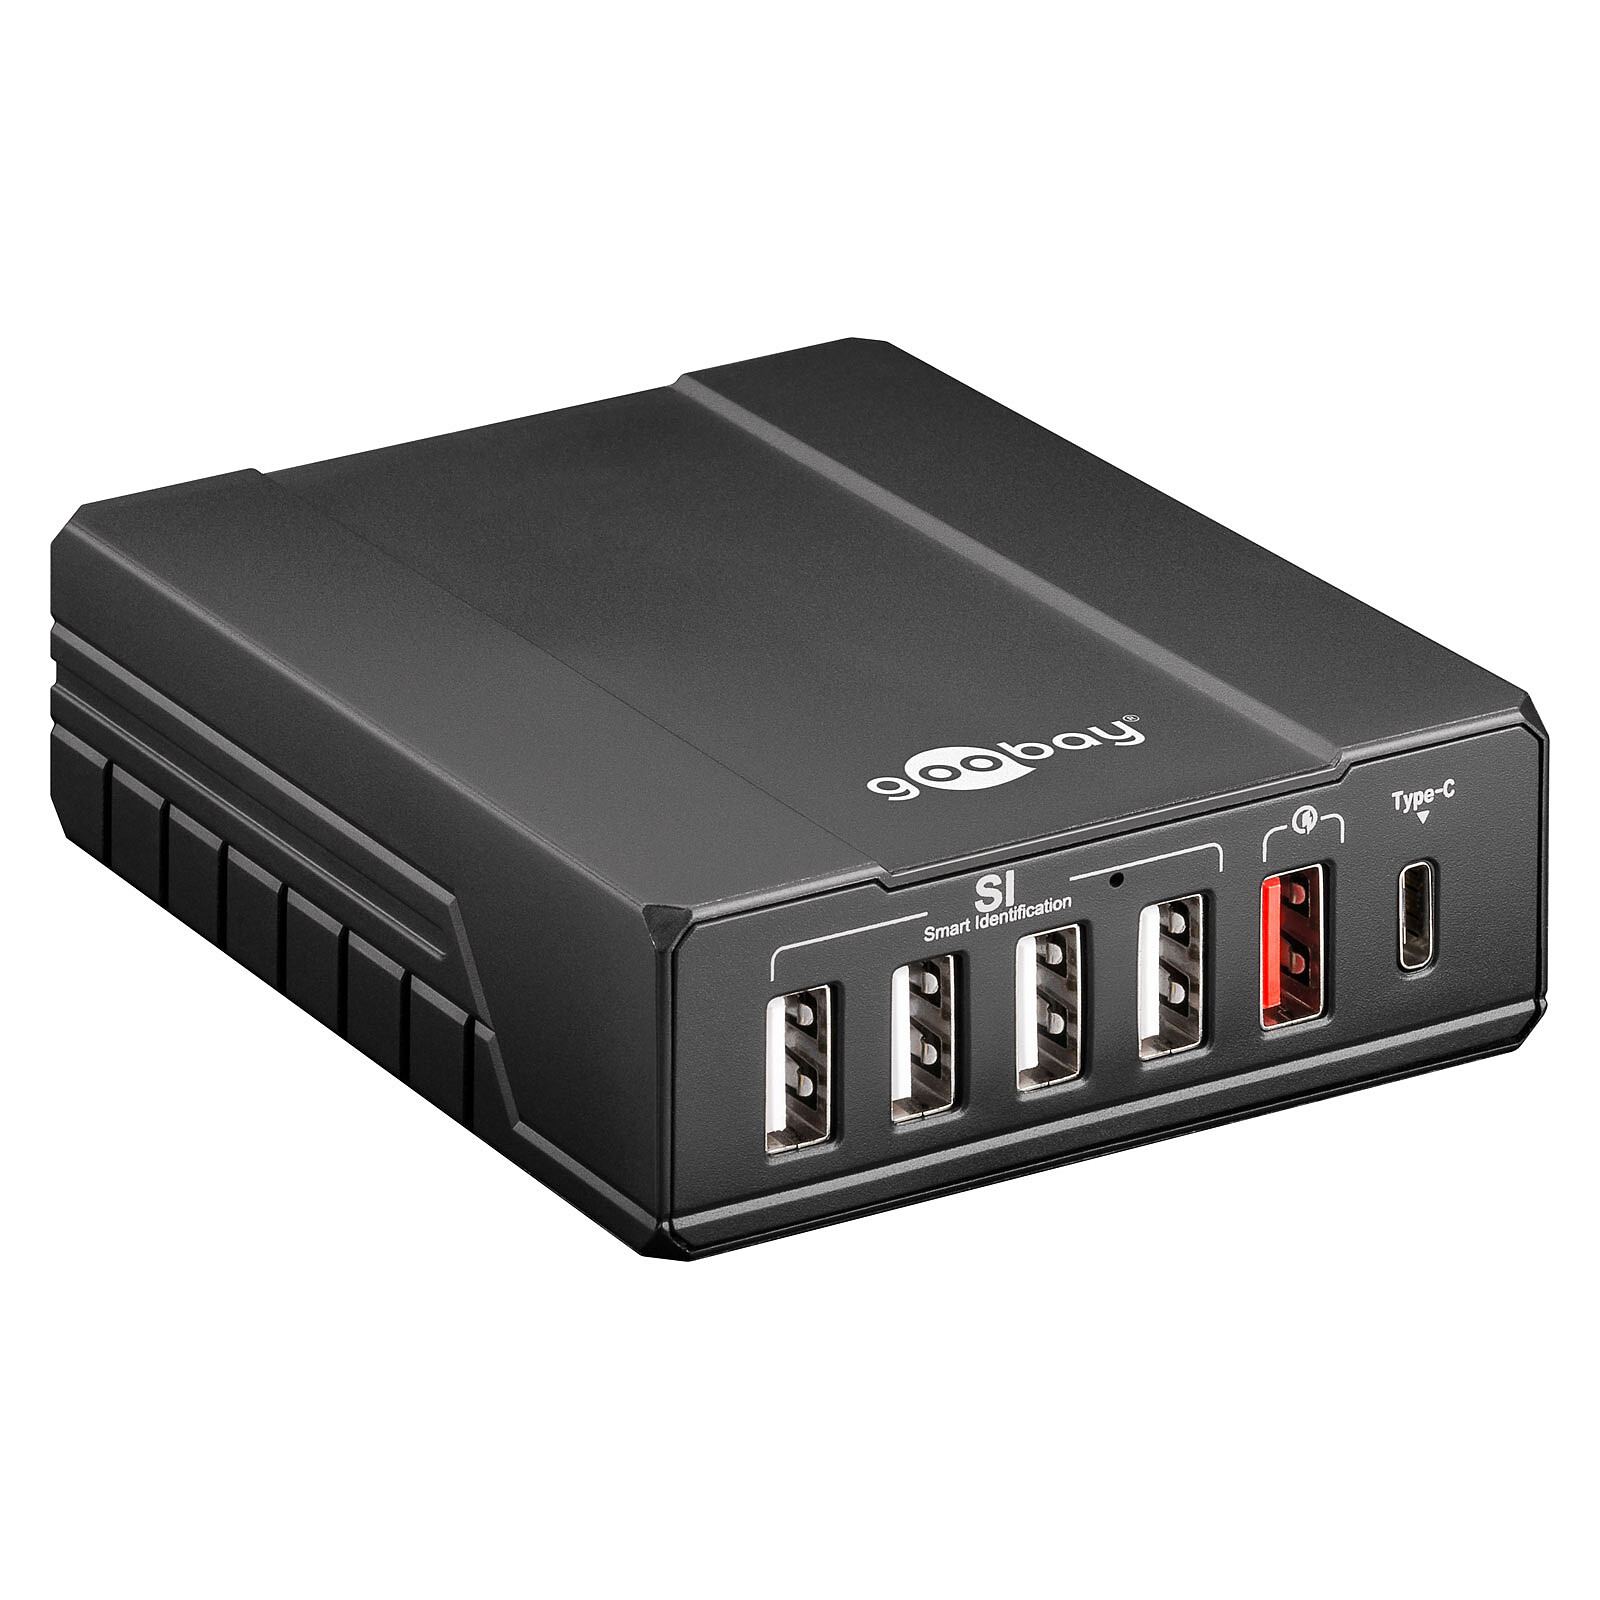 Multi chargeur USB 10A 50W (6 ports) - USB - Garantie 3 ans LDLC